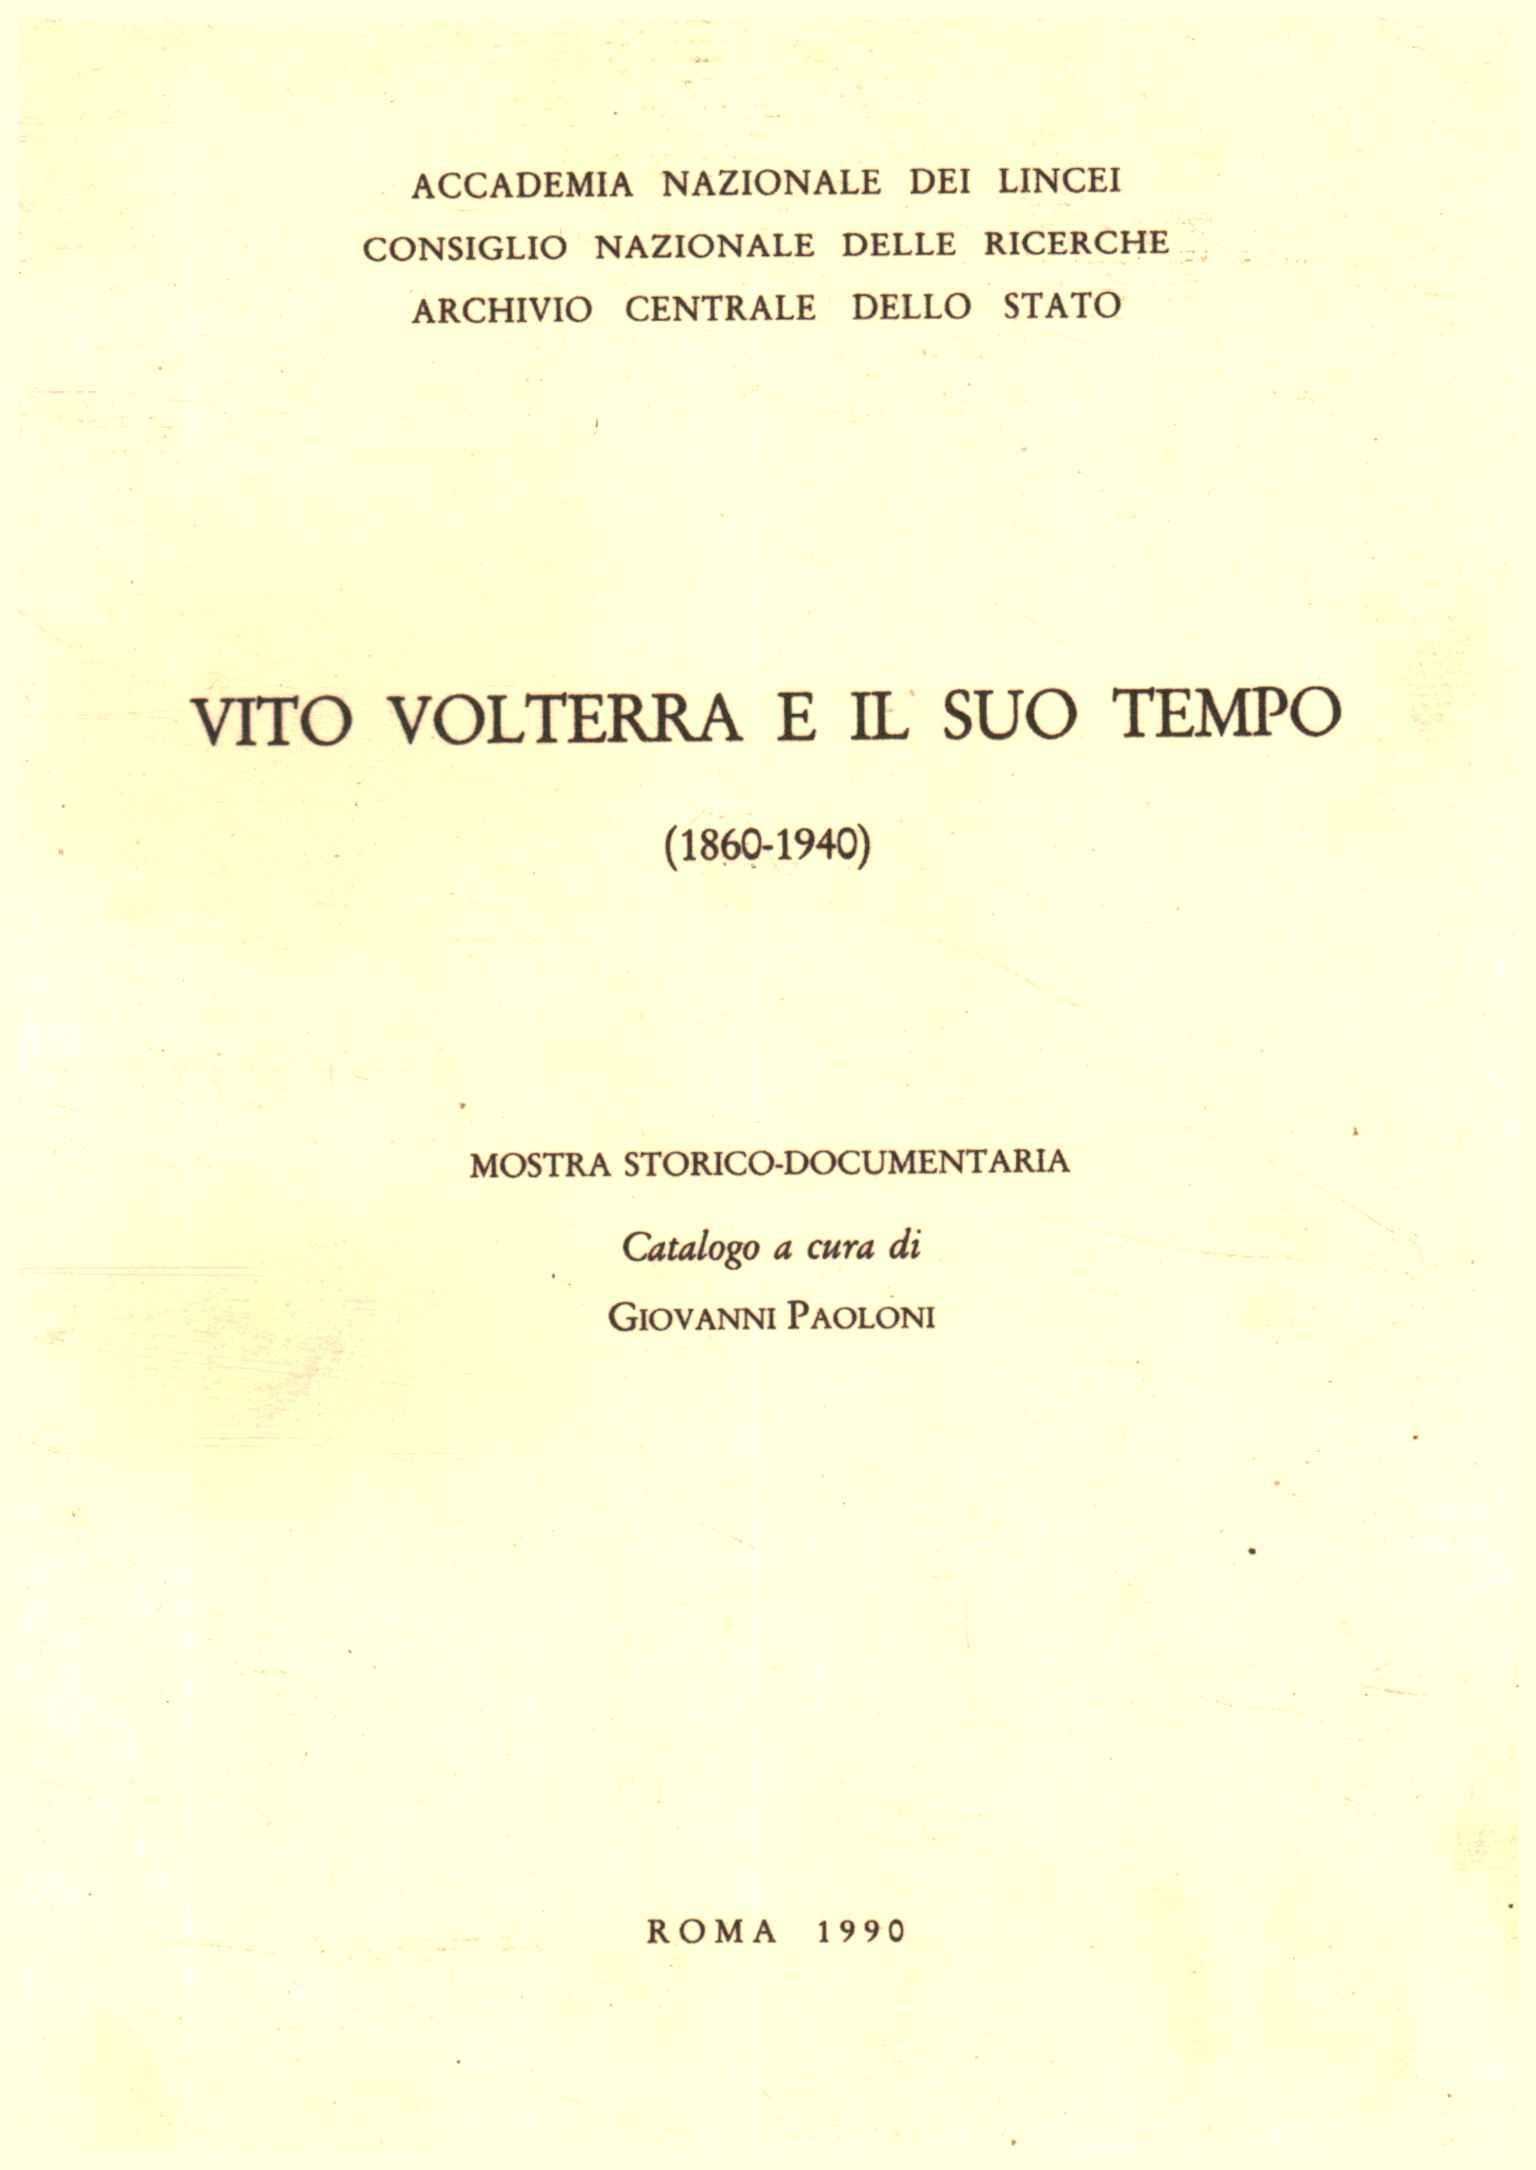 Vito Volterra and his times (1860-194